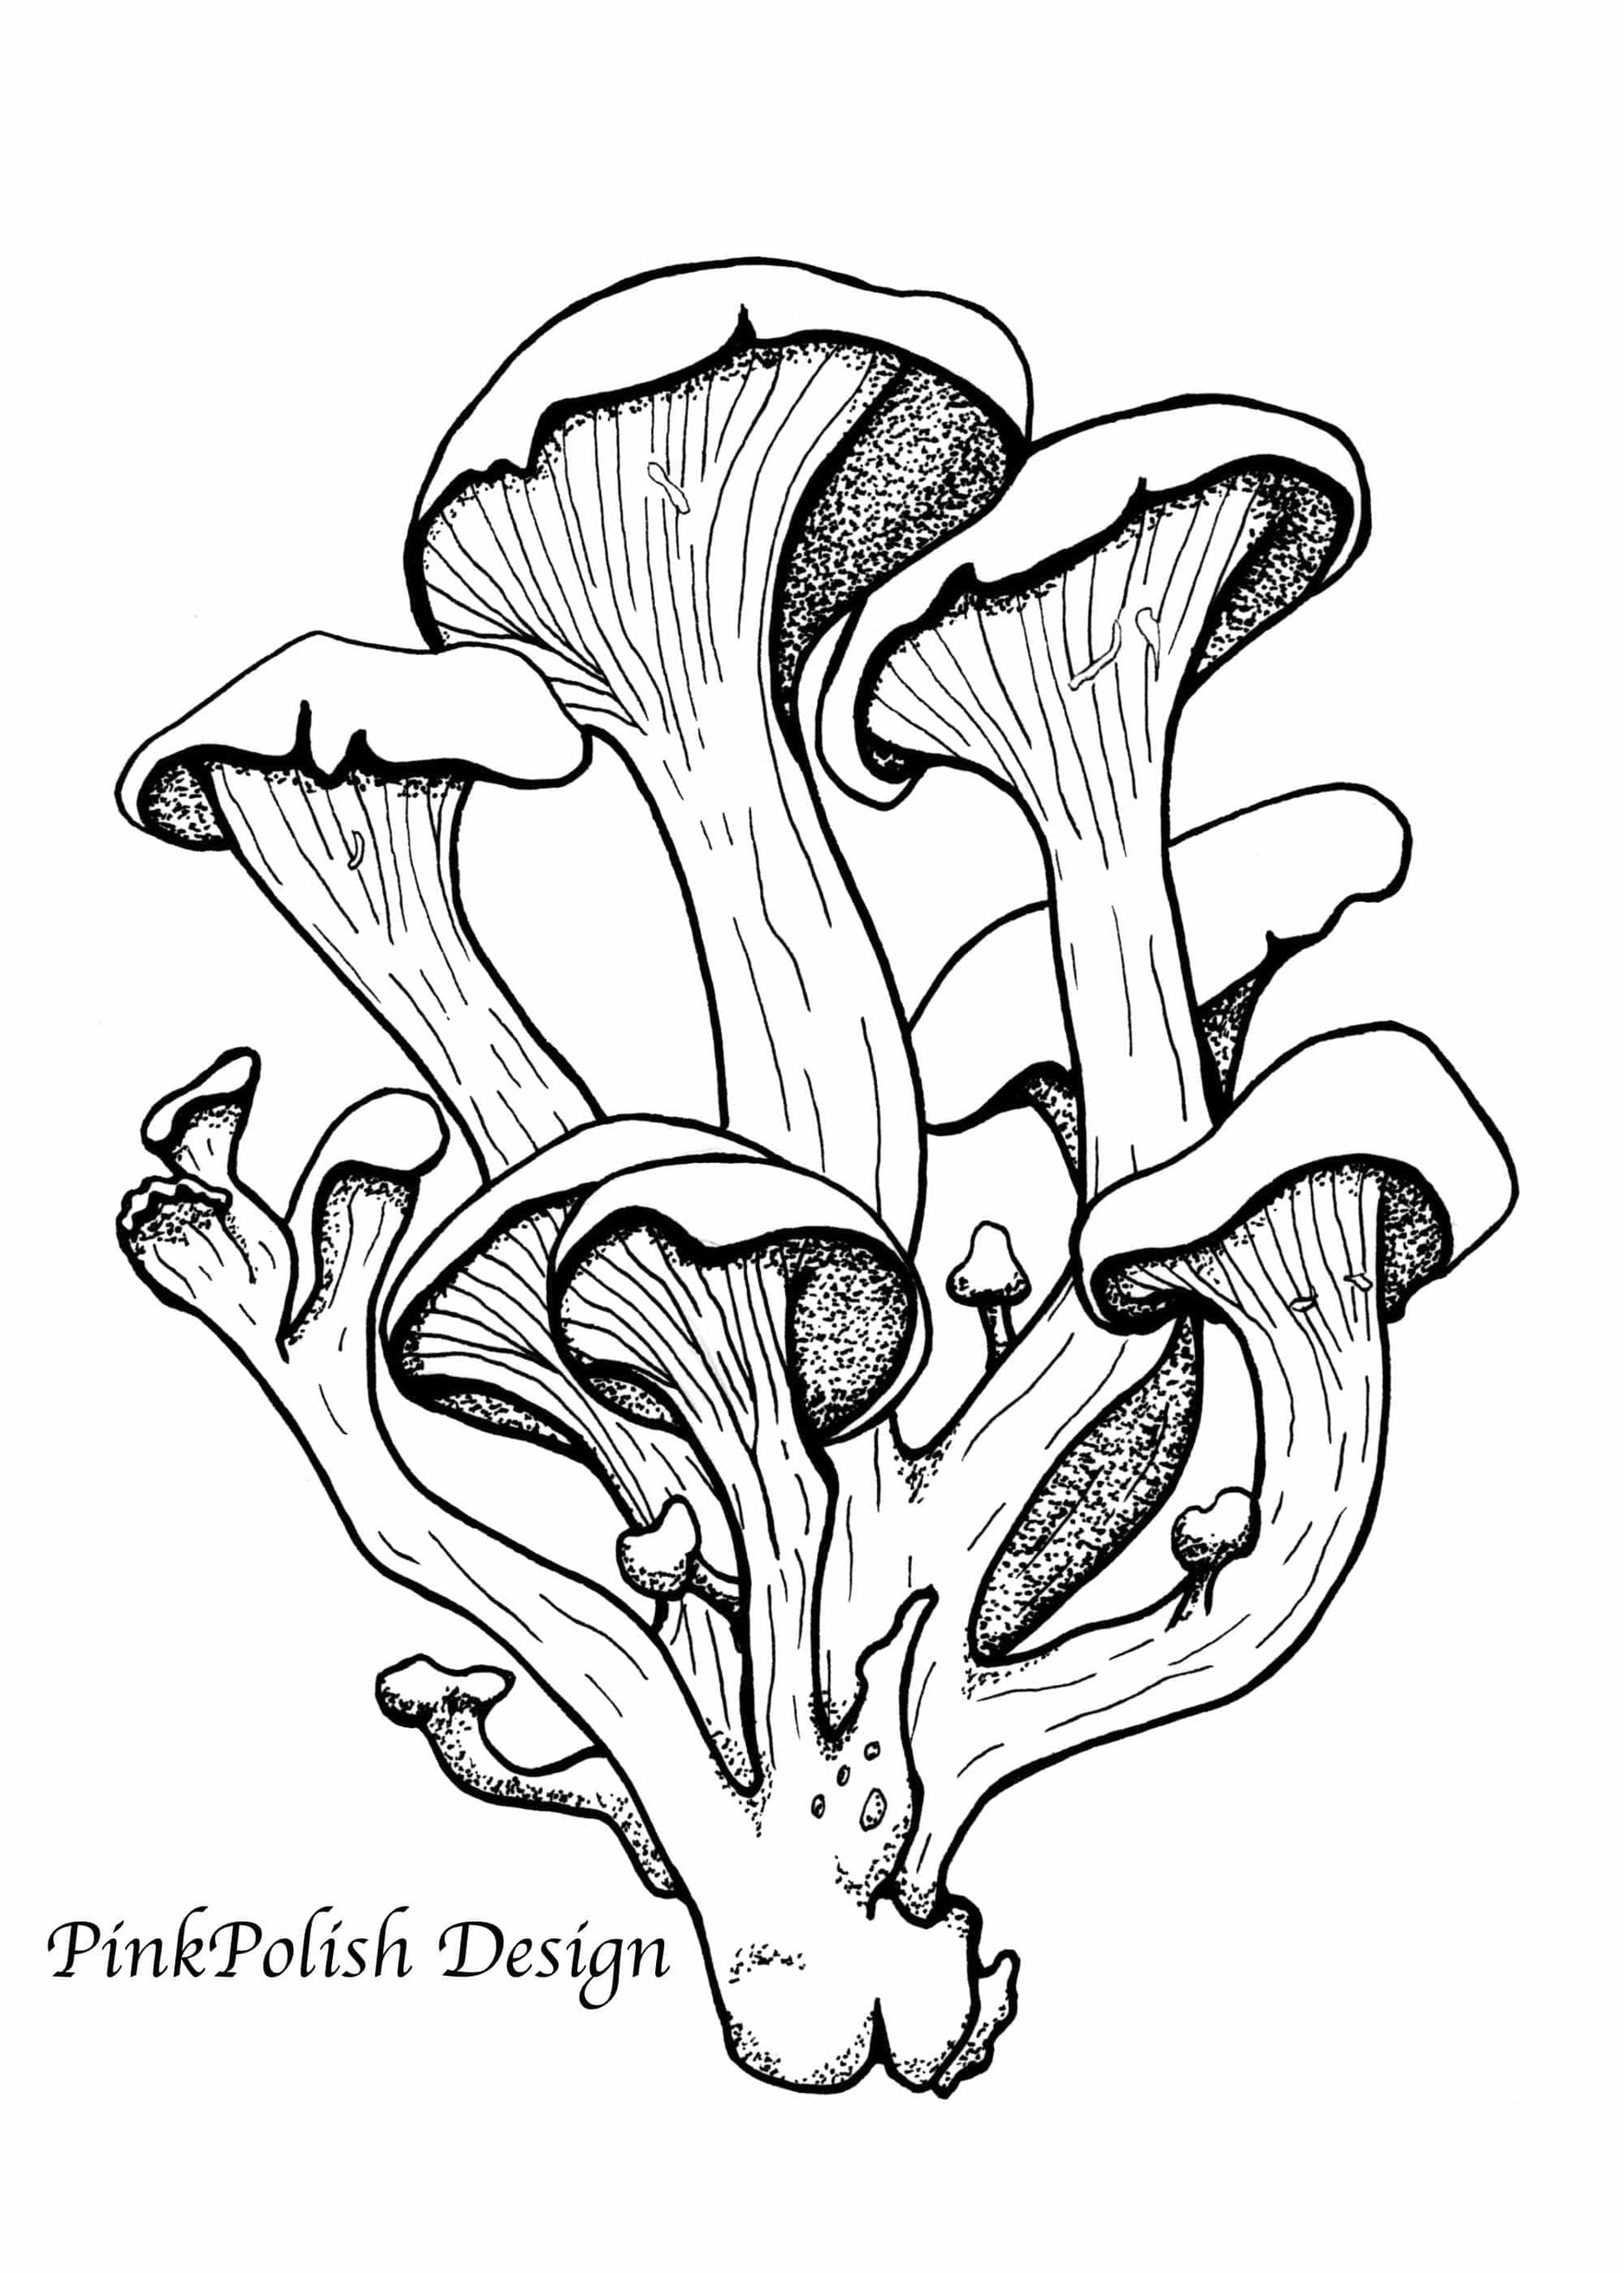 PinkPolish Design Original Art "Oyster Mushroom" PNW Fungi Inspired Original Ink Illustration, 5"x7"